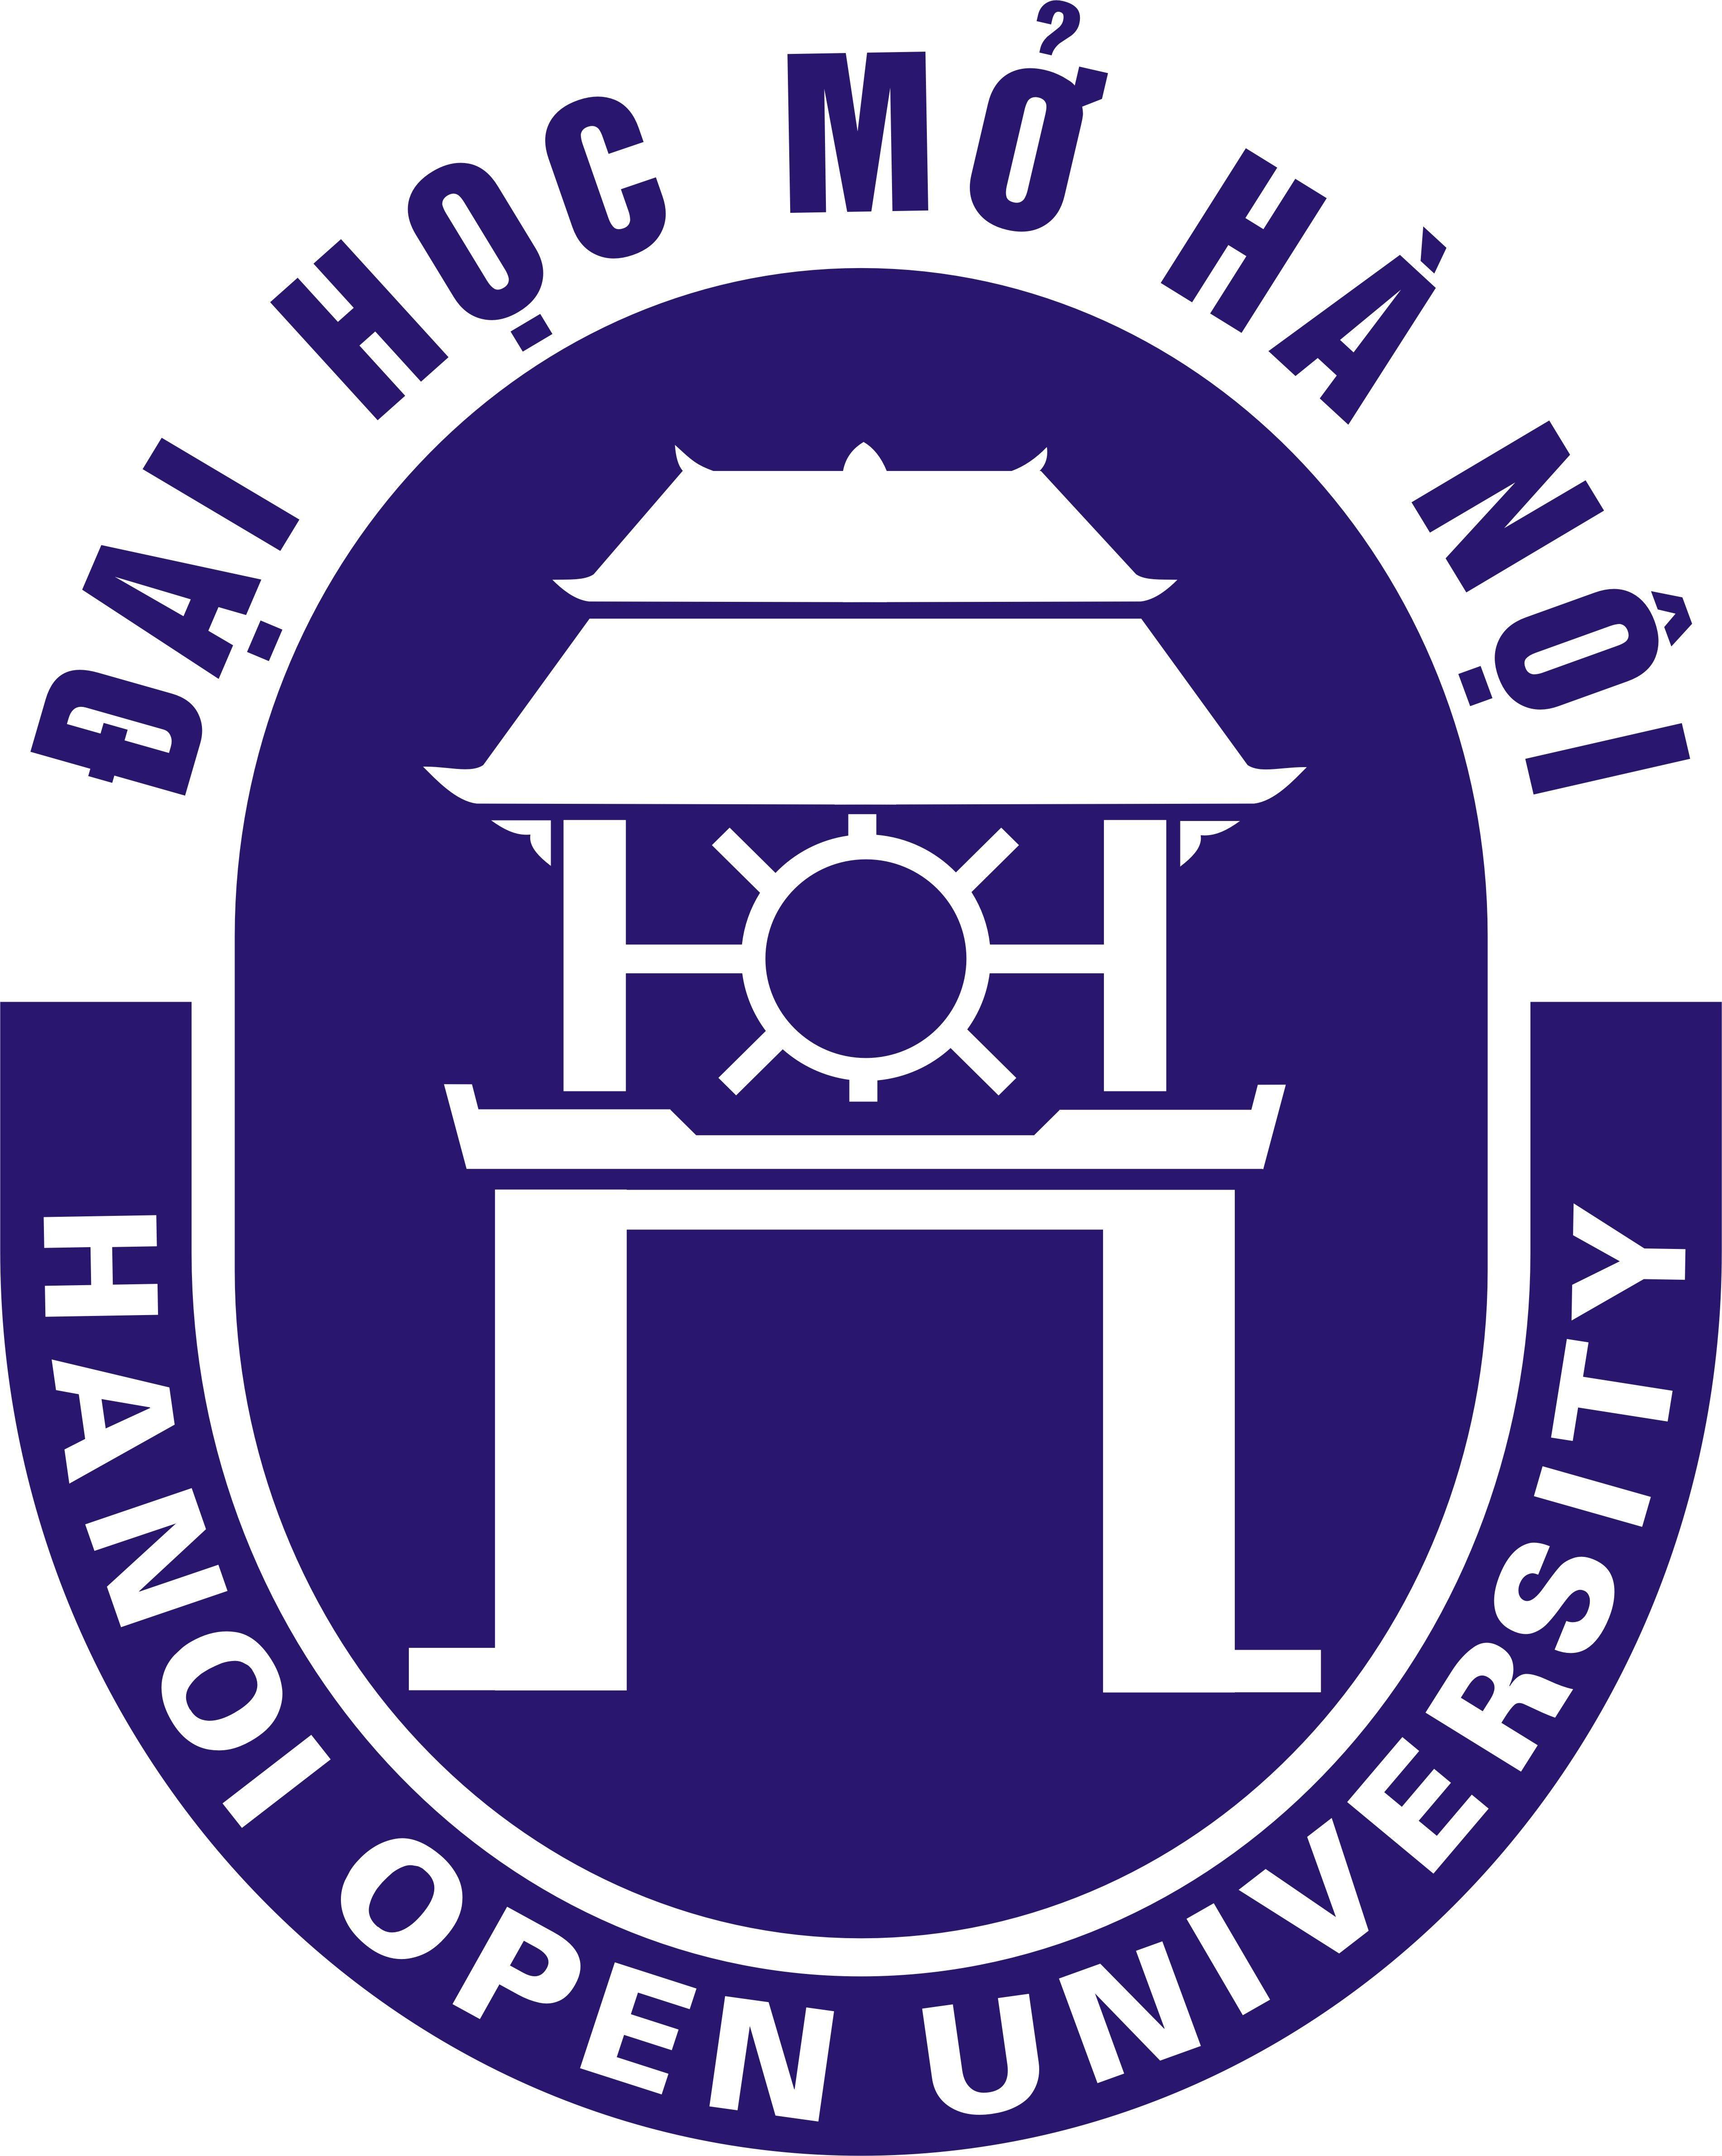 Hou Logo - Hanoi Open University